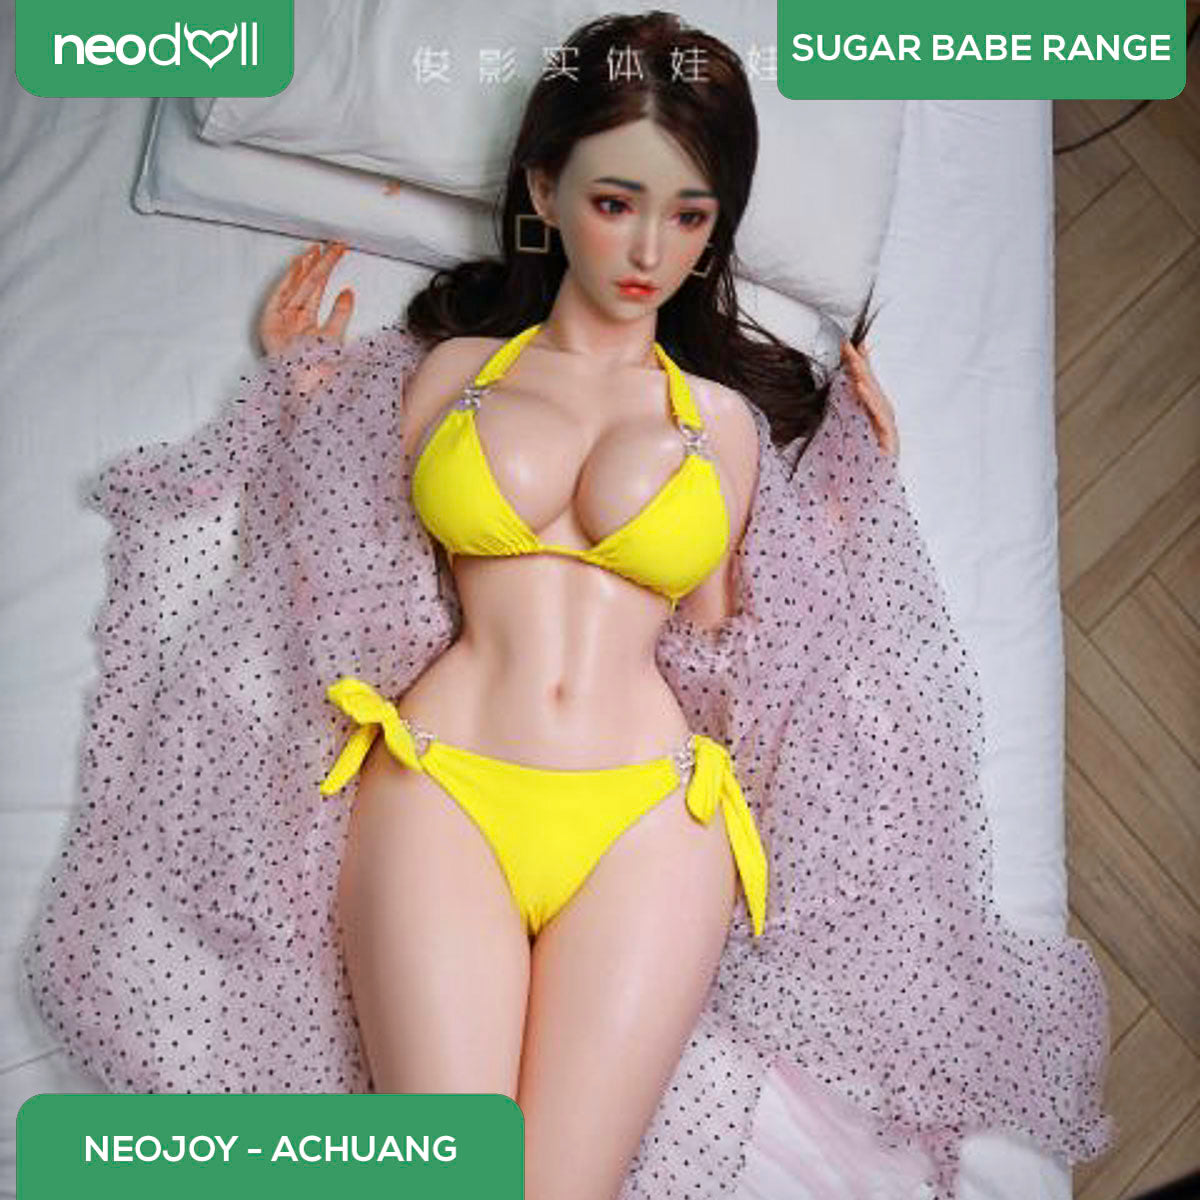 Neodoll Sugar Babe - AChuang - Silicone TPE Hybrid Sex Doll - Gel Breast - Uterus - 157cm - Silicone Colour